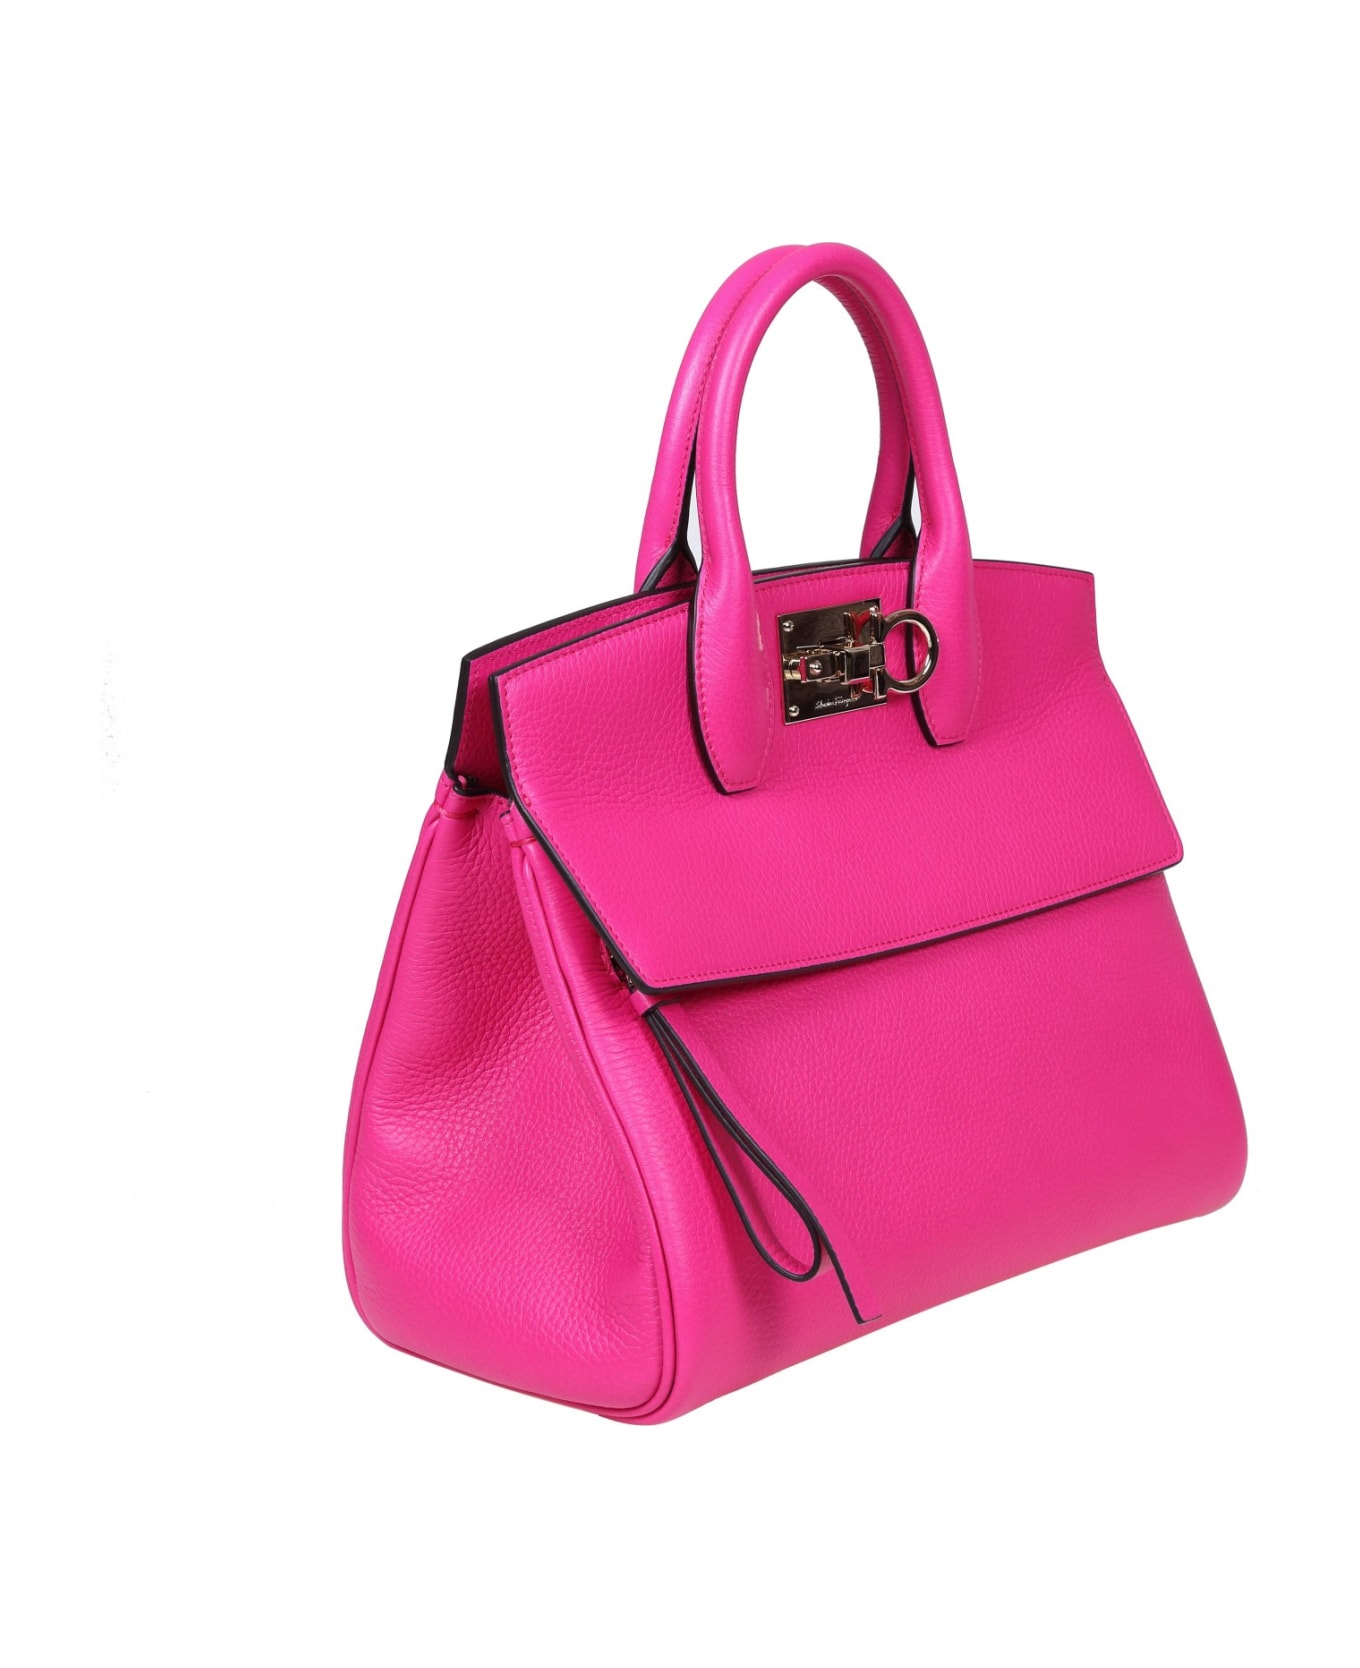 Ferragamo Small Studio Bag In Hot Pink Color Leather | italist, ALWAYS ...